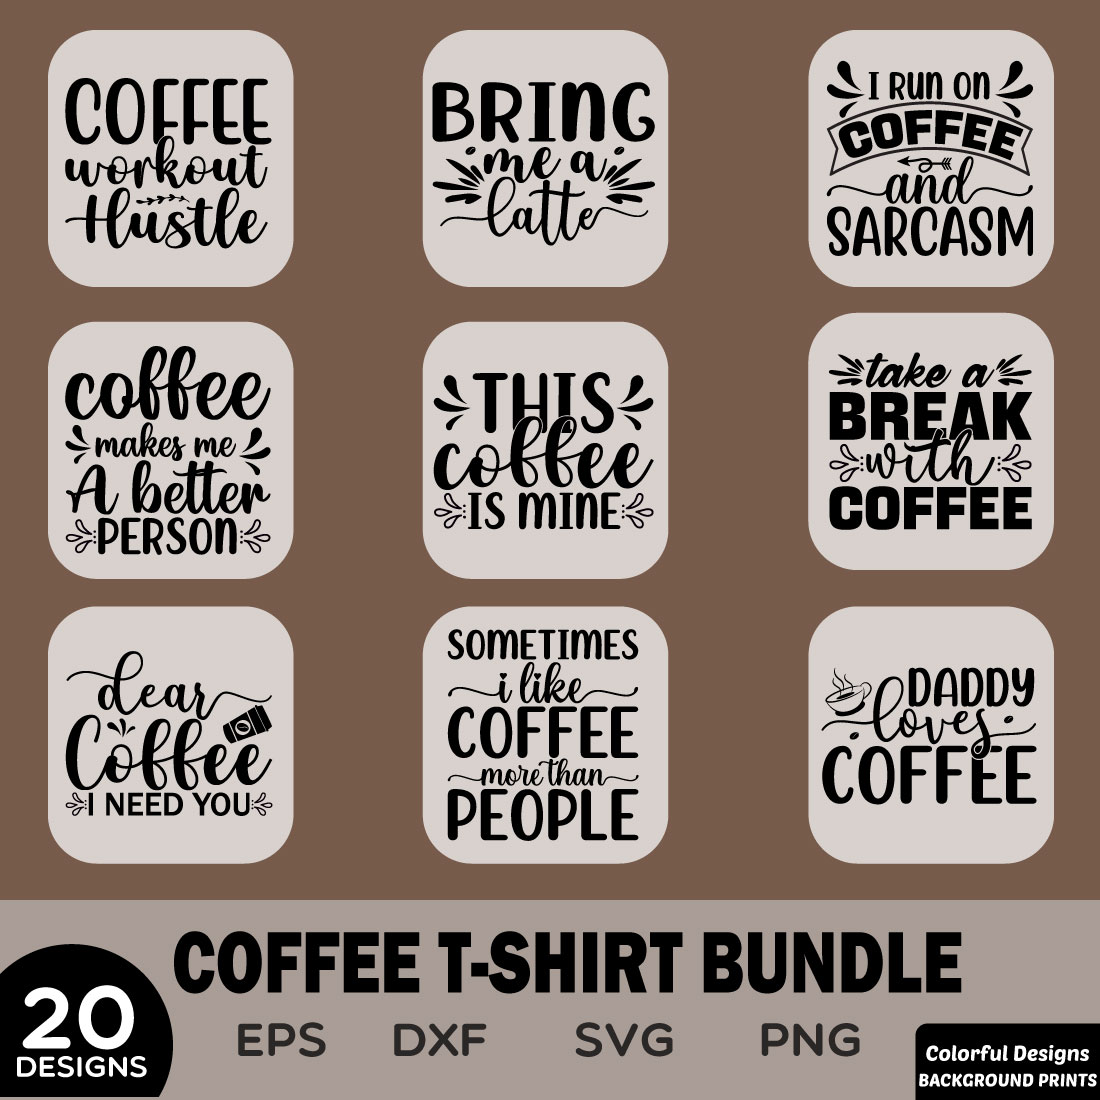 Coffee t-shirt design Bundle preview image.